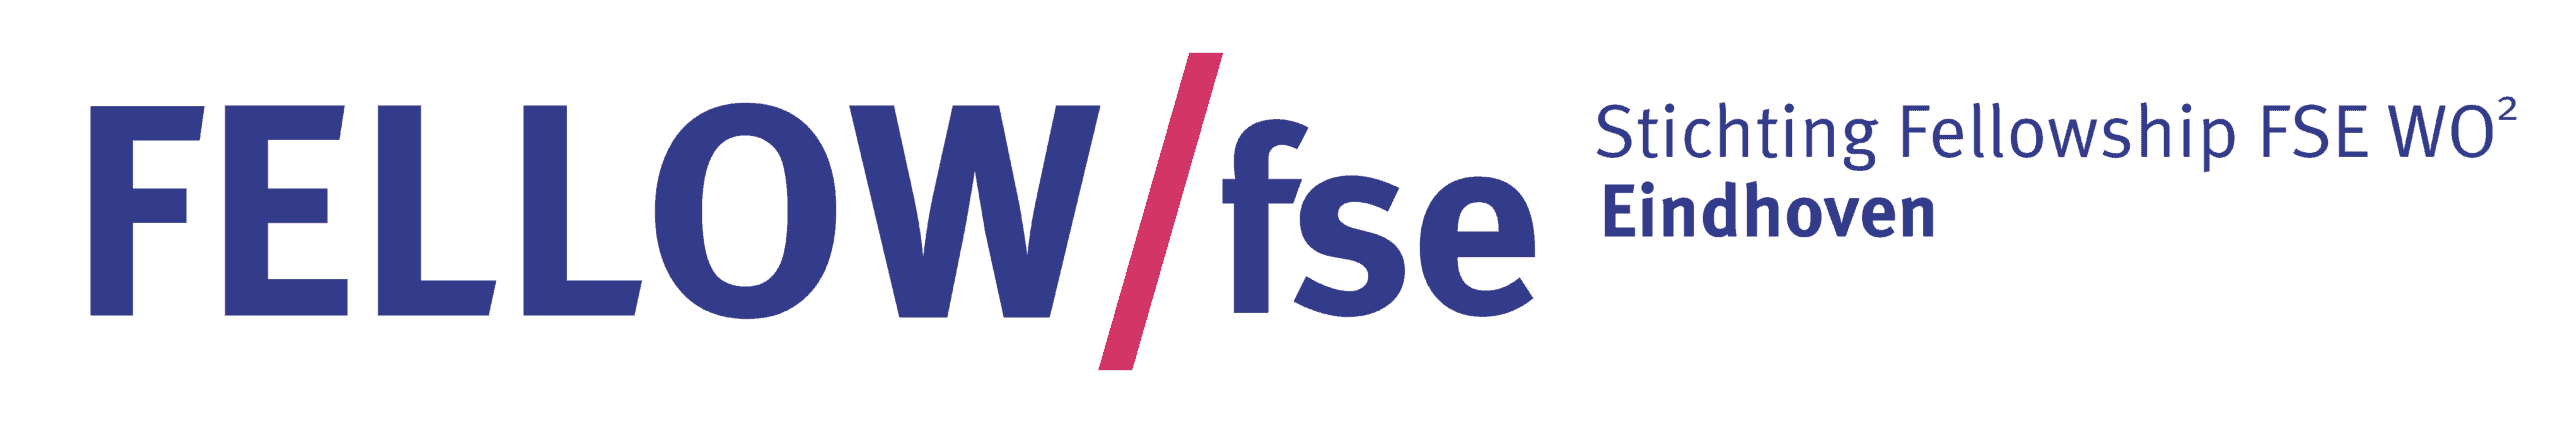 Logo stichting fellowship fse wo2-01